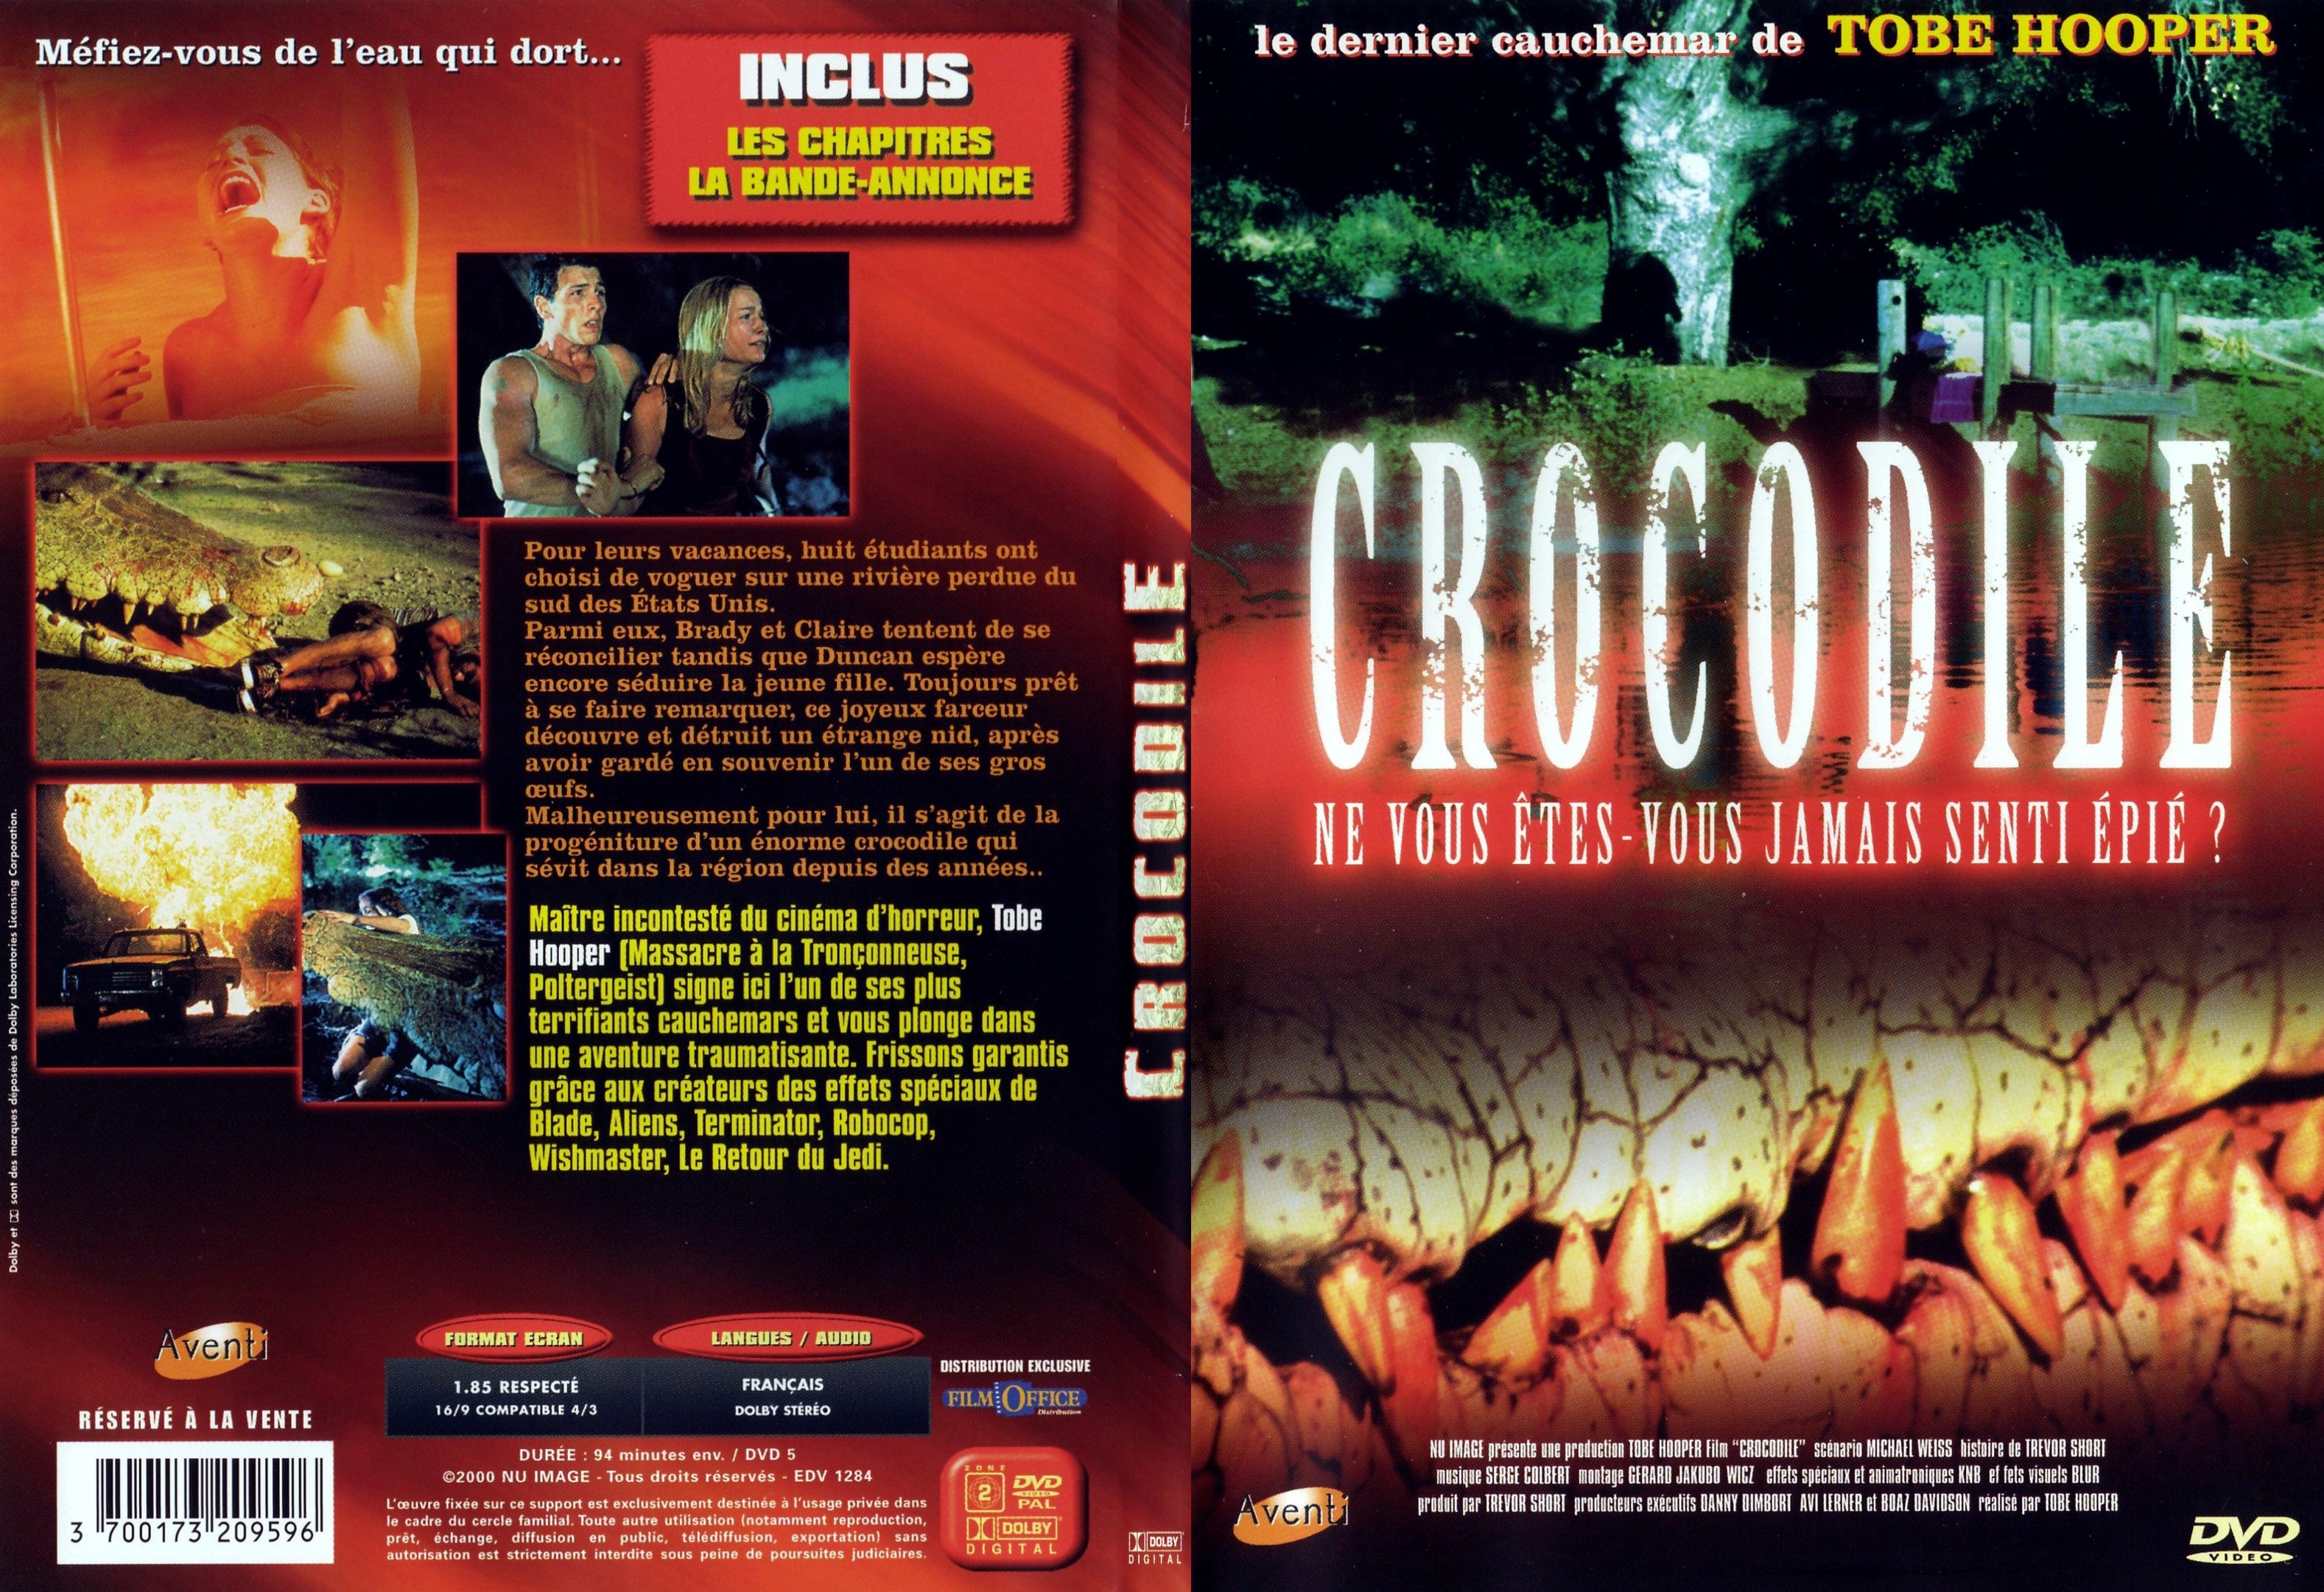 Jaquette DVD Crocodile - SLIM